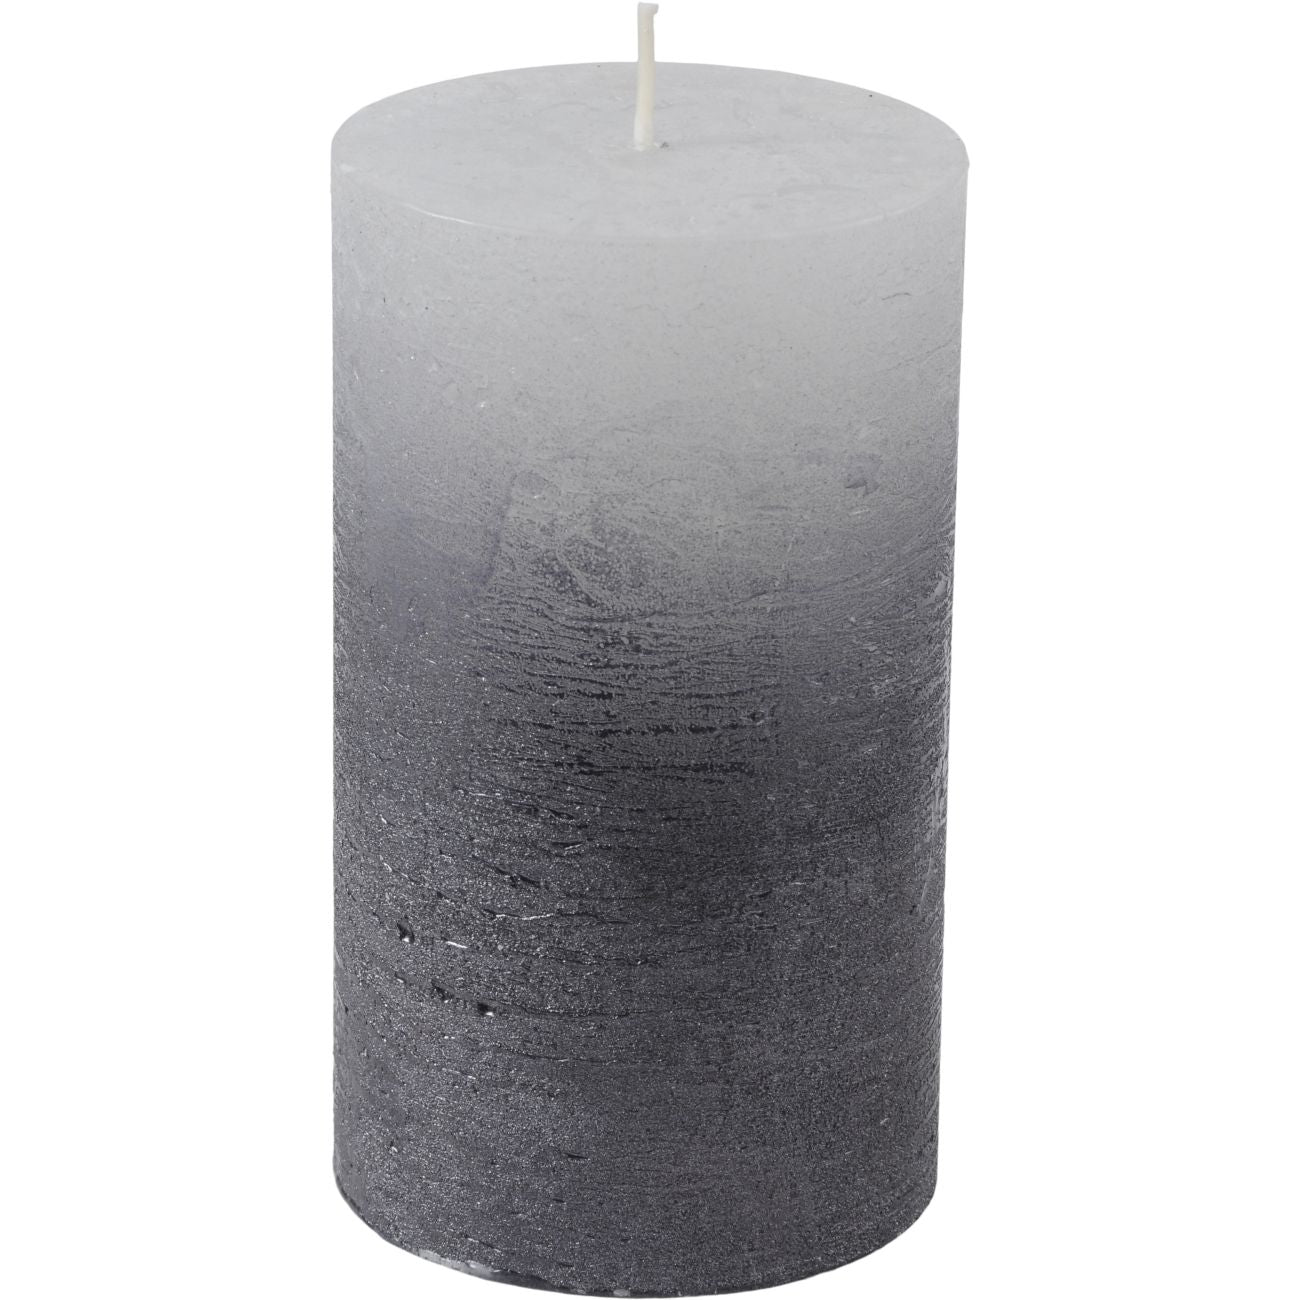 Libra White Pillar Candle With Metallic Black Ombre Base 7x19cm